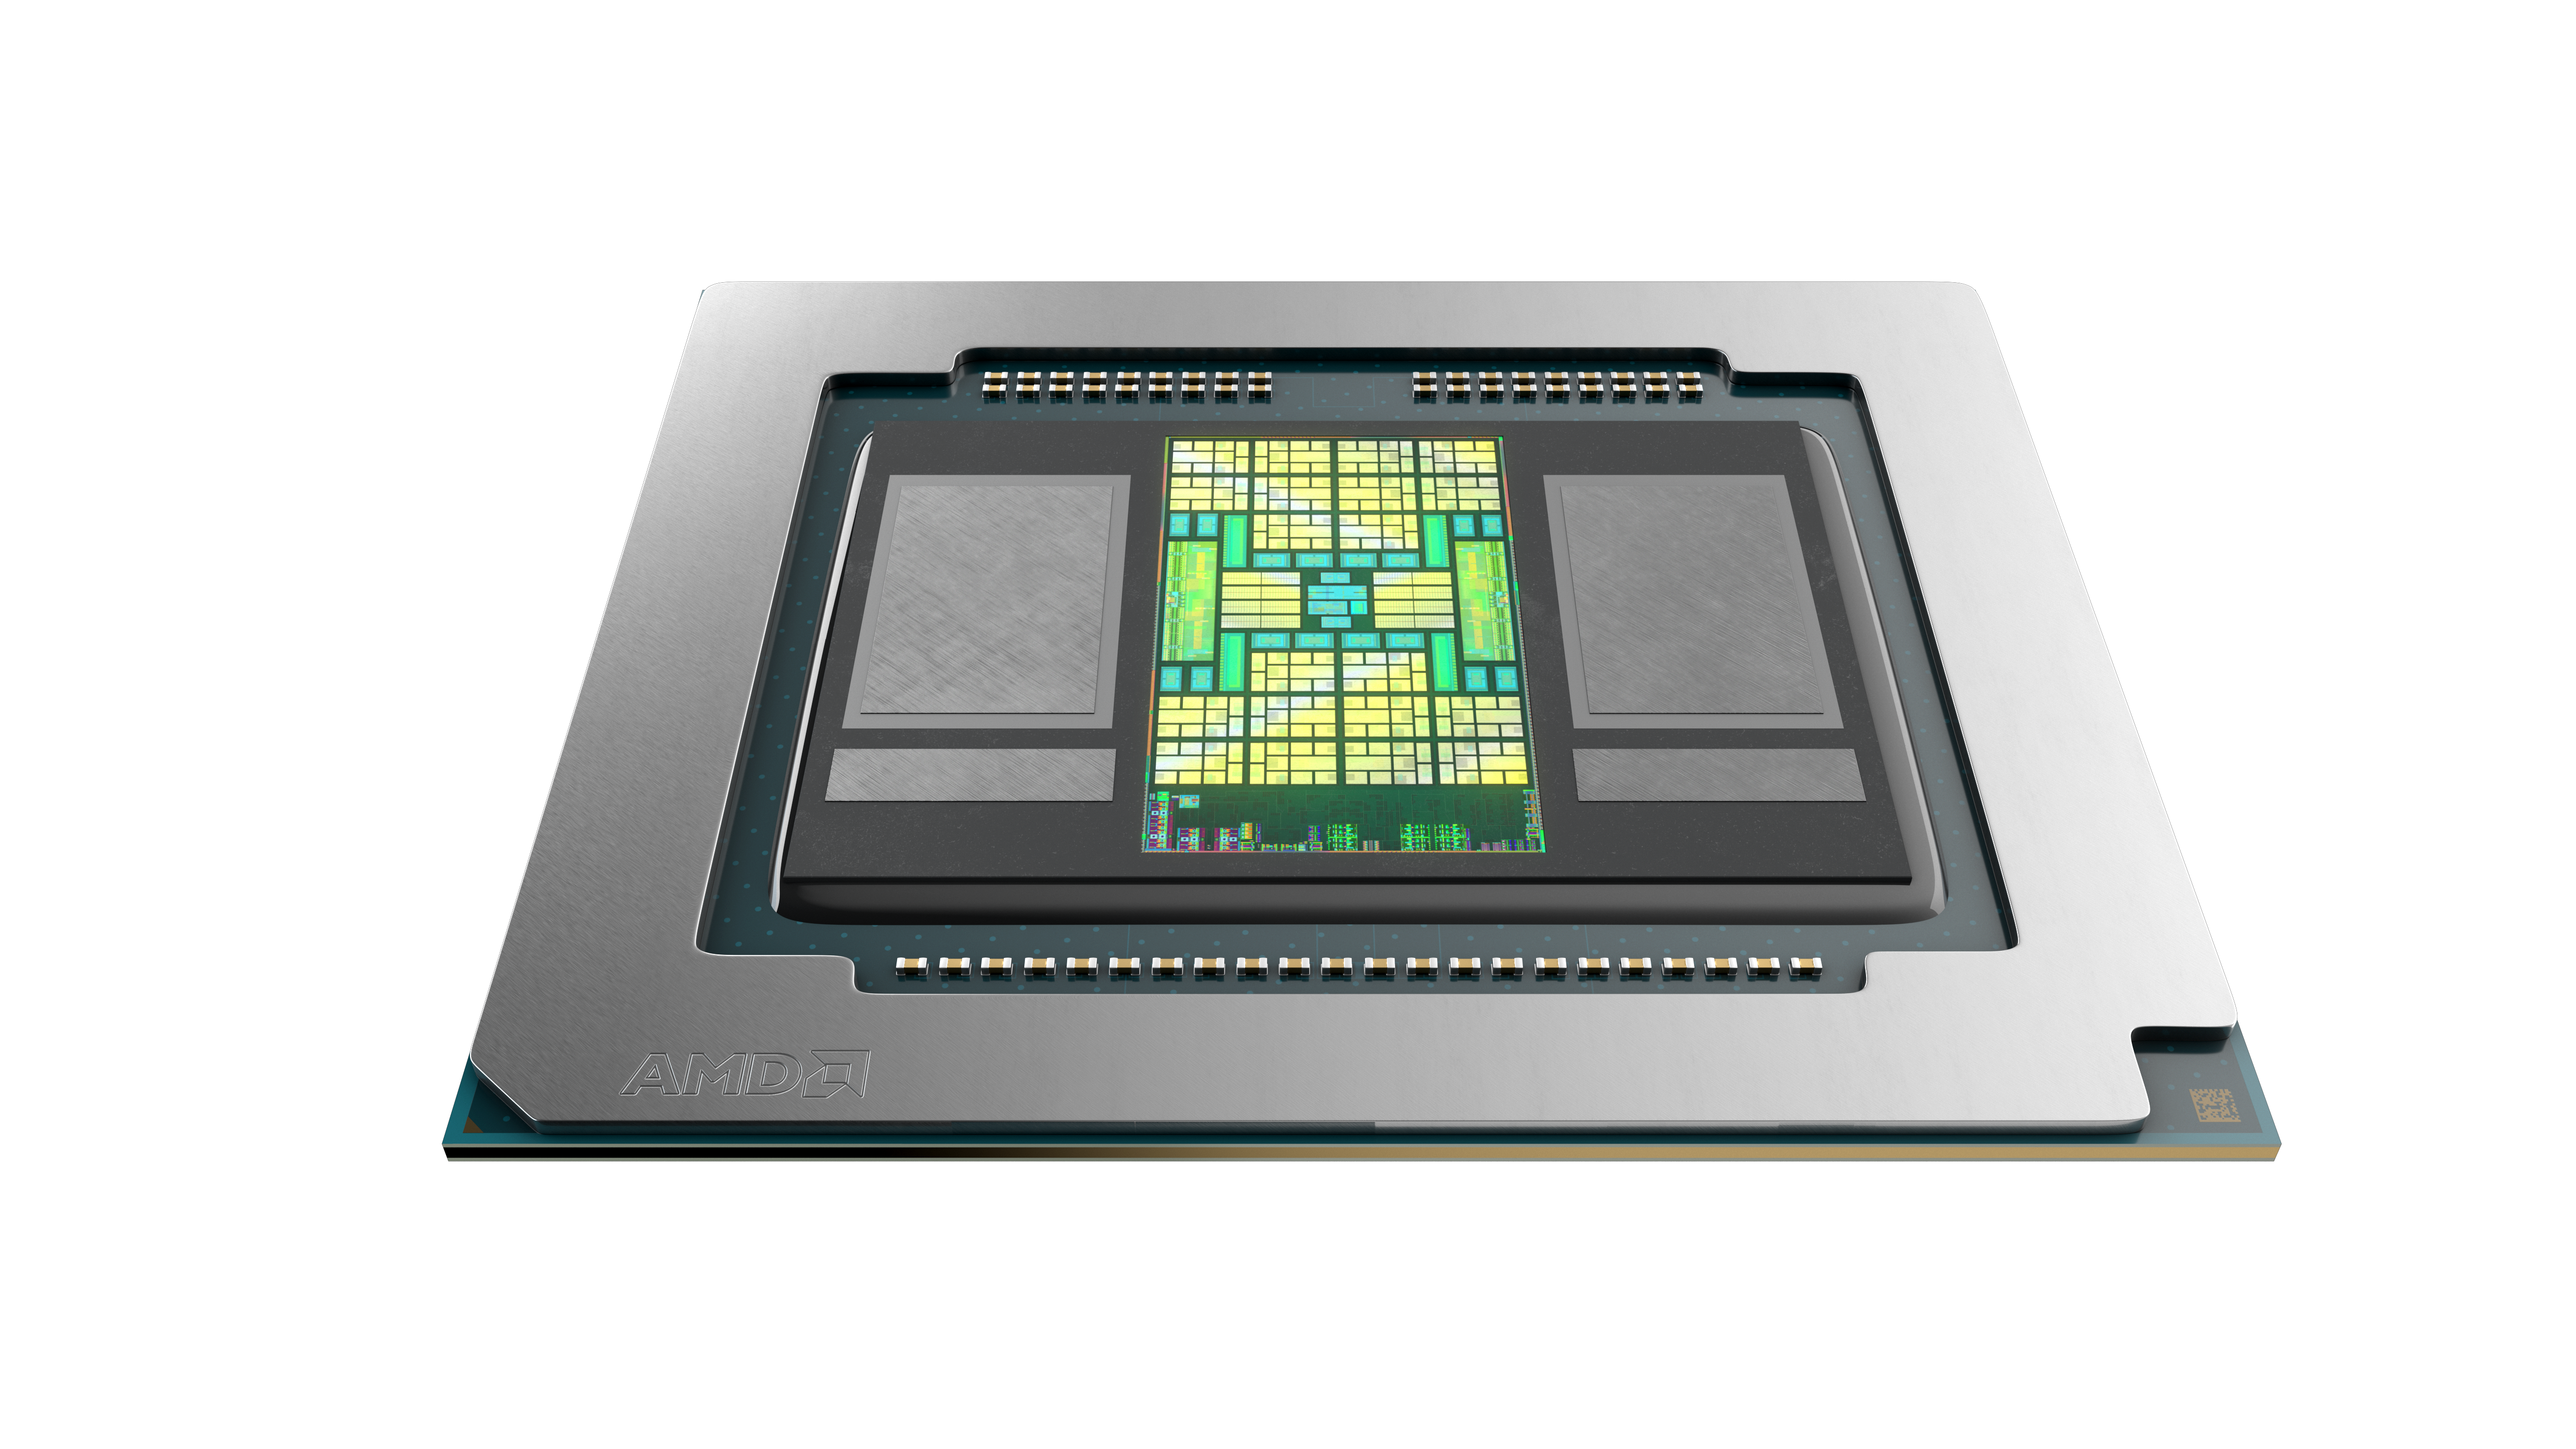 AMD Radeon Pro 5600M mobile GPU